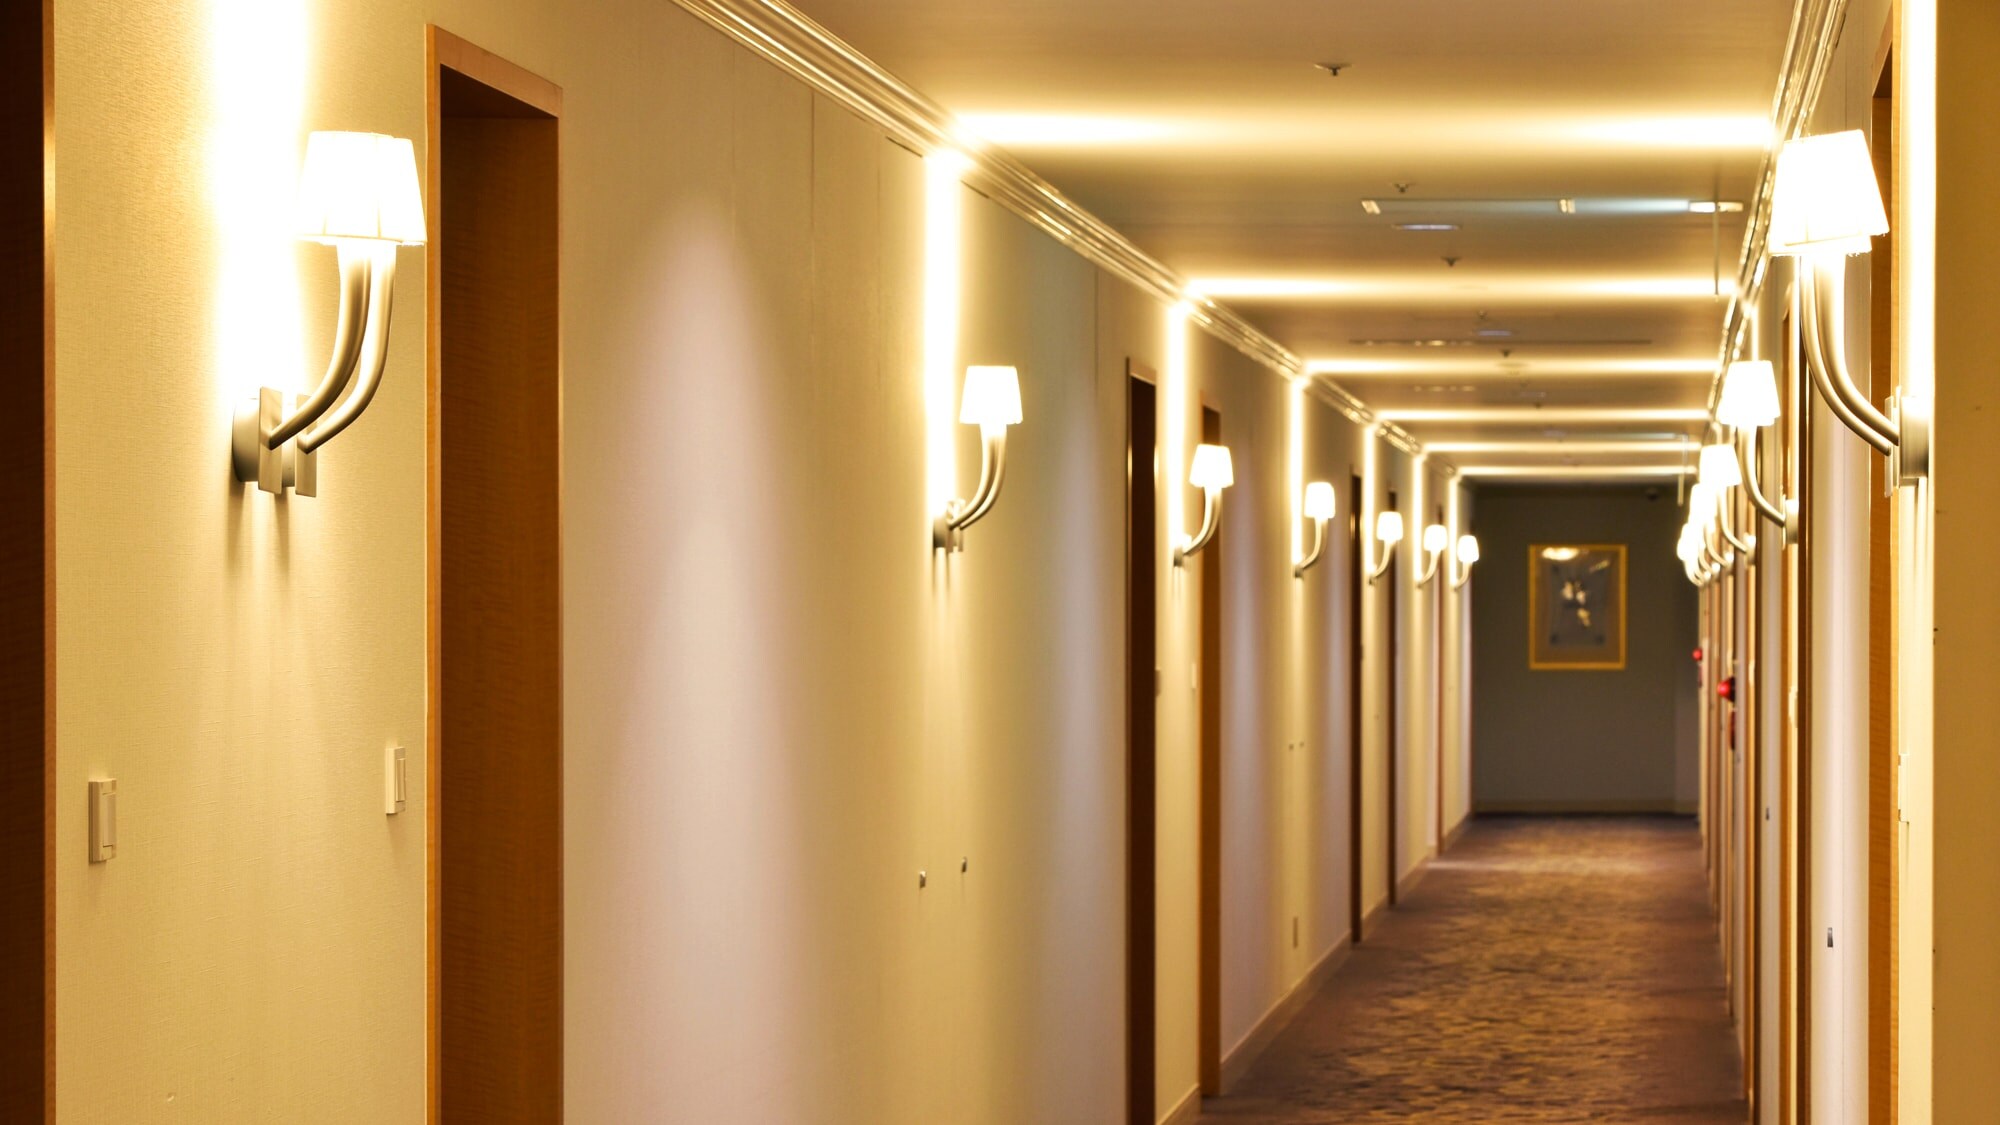 [Corridor] Image of the hall